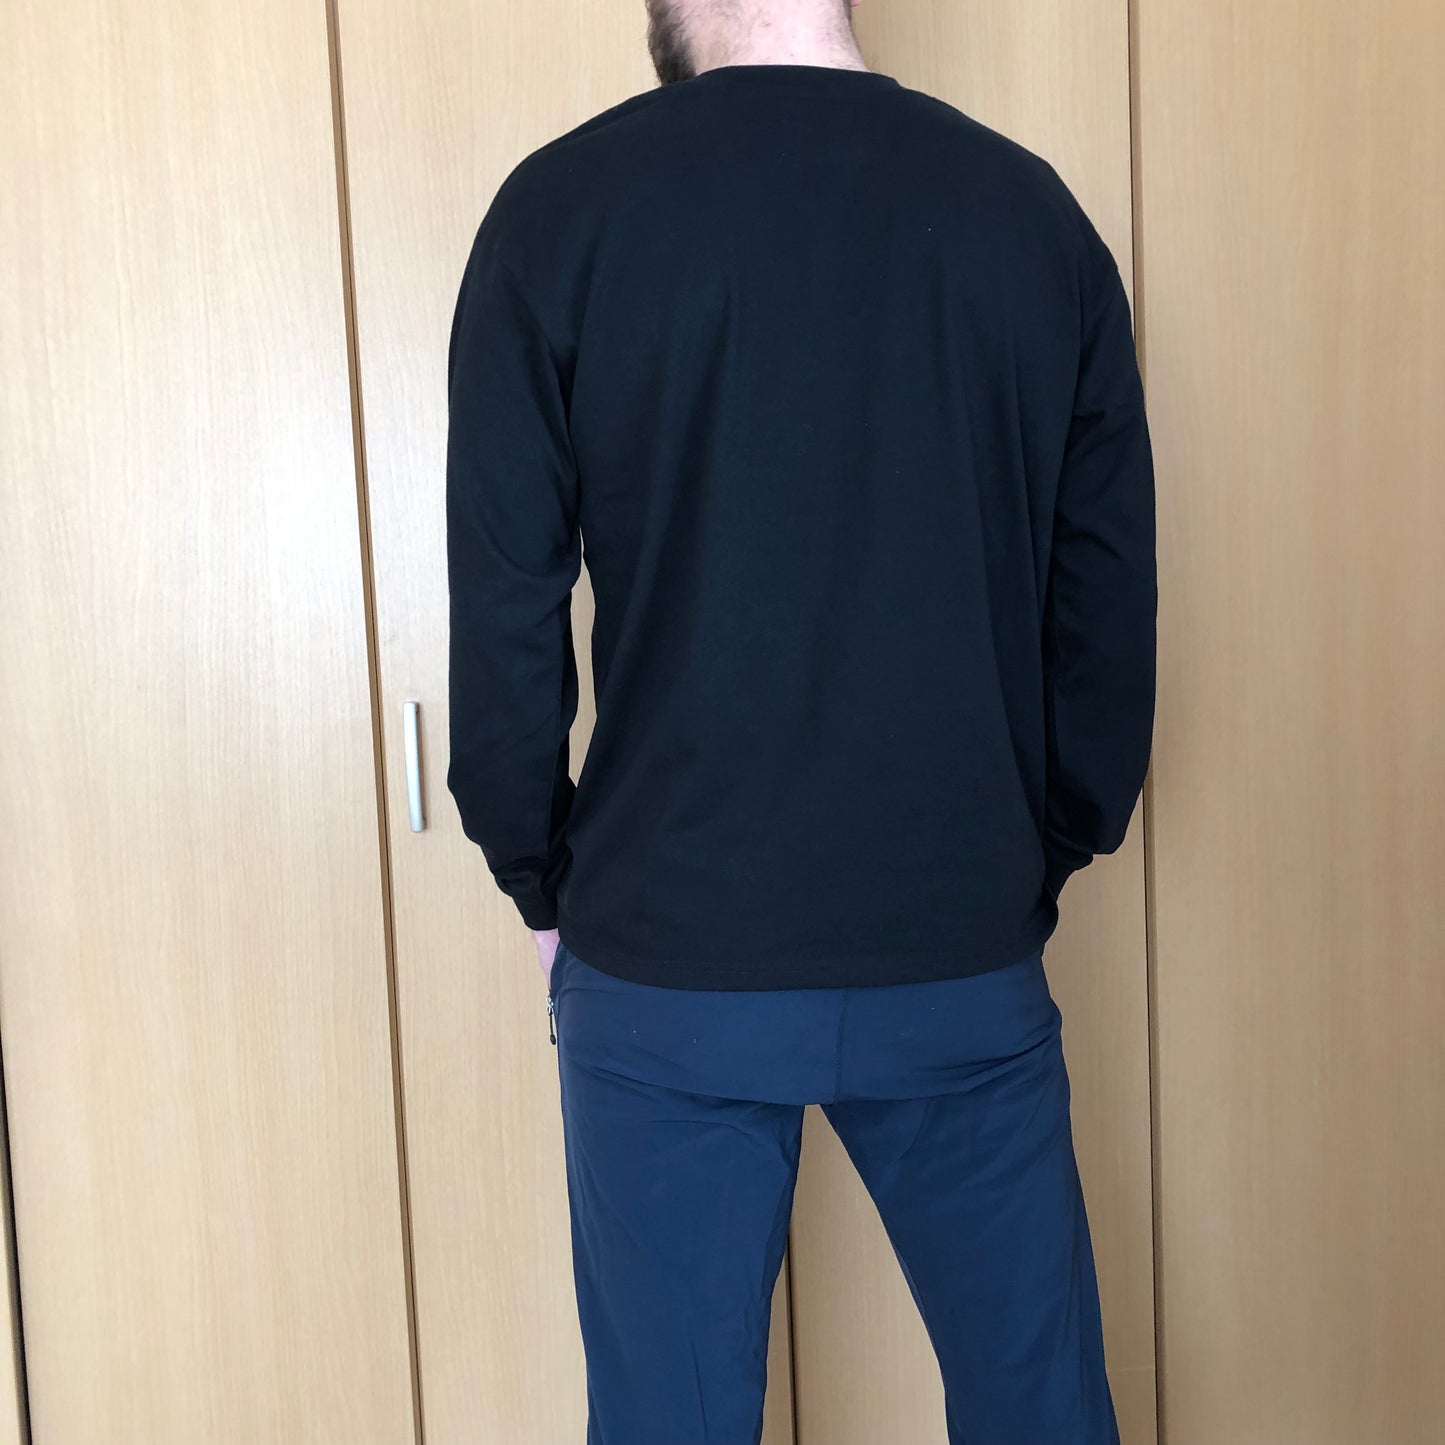 JAPAN FIT Men's Long Sleeve T-Shirt - Black / S